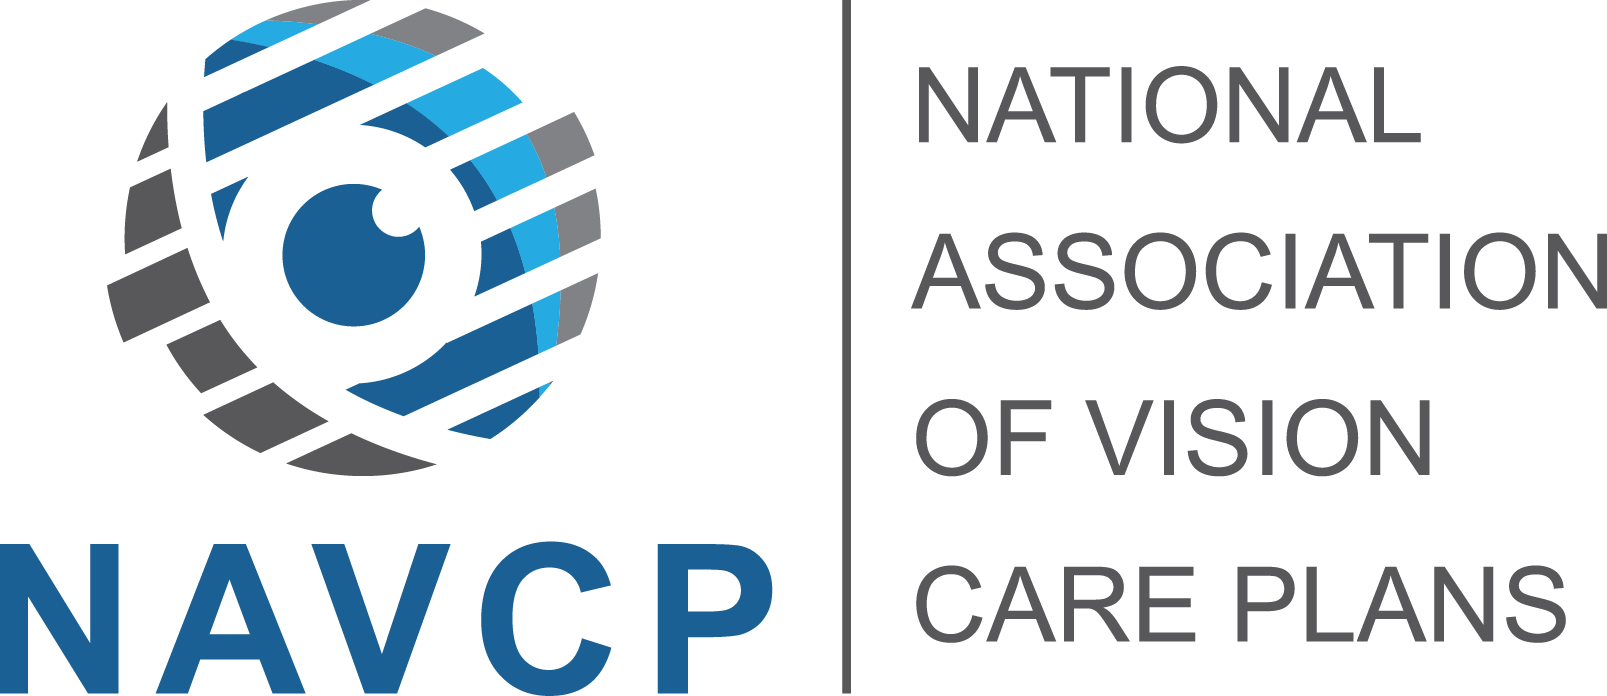 National Association of Vision Care Plans